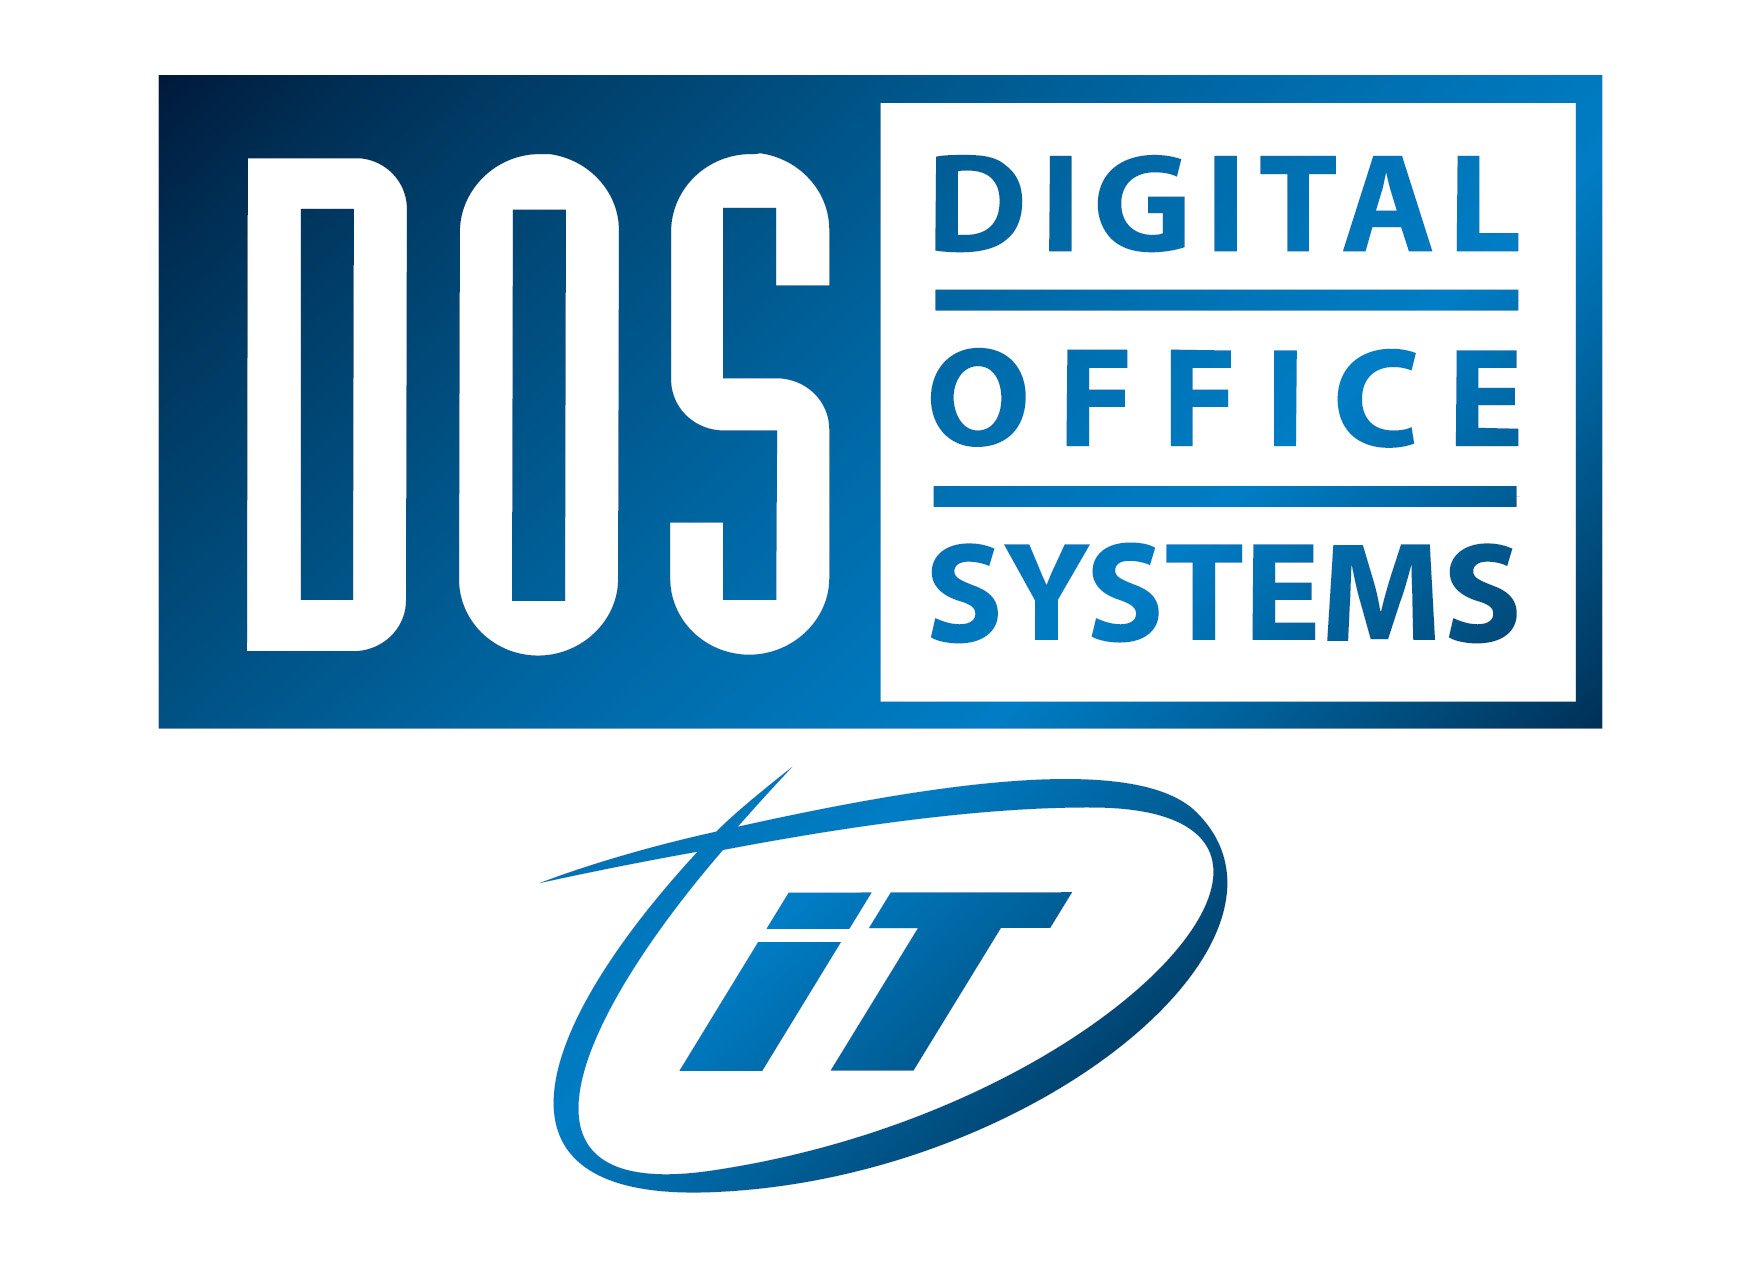 Digital Office Systems Logo 2 - Web.jpg